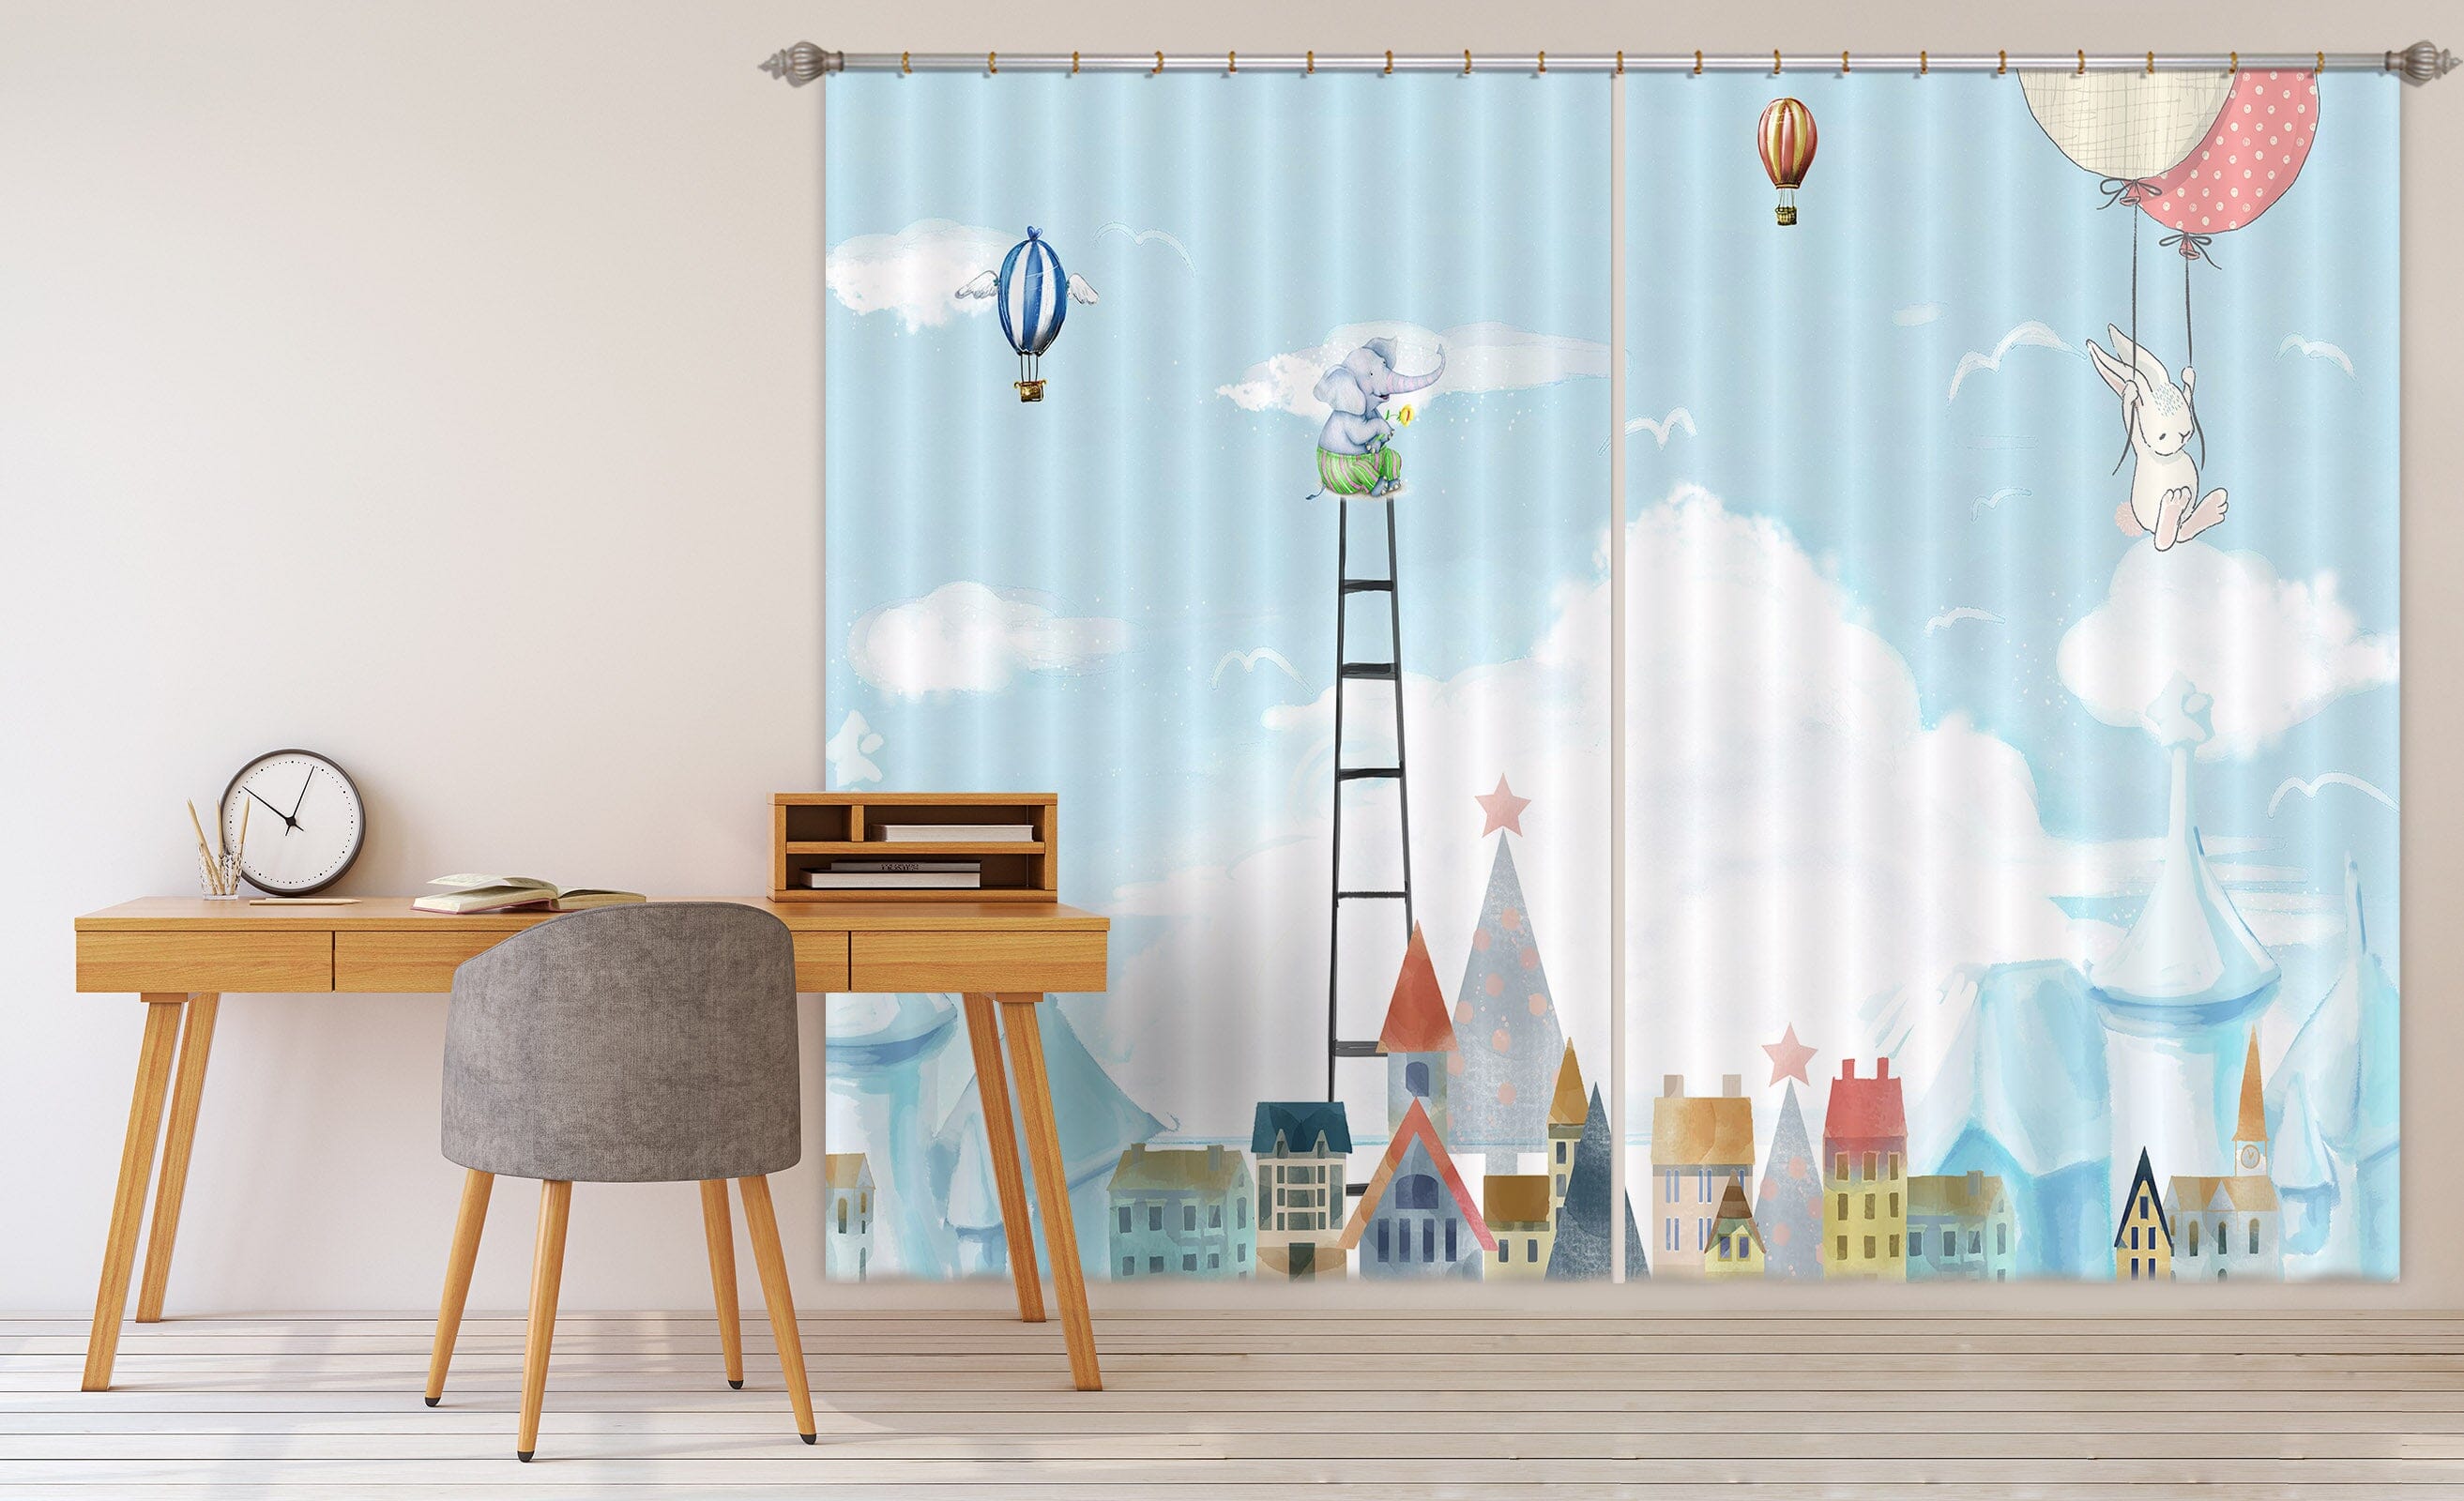 3D Children Kingdom 744 Curtains Drapes Wallpaper AJ Wallpaper 